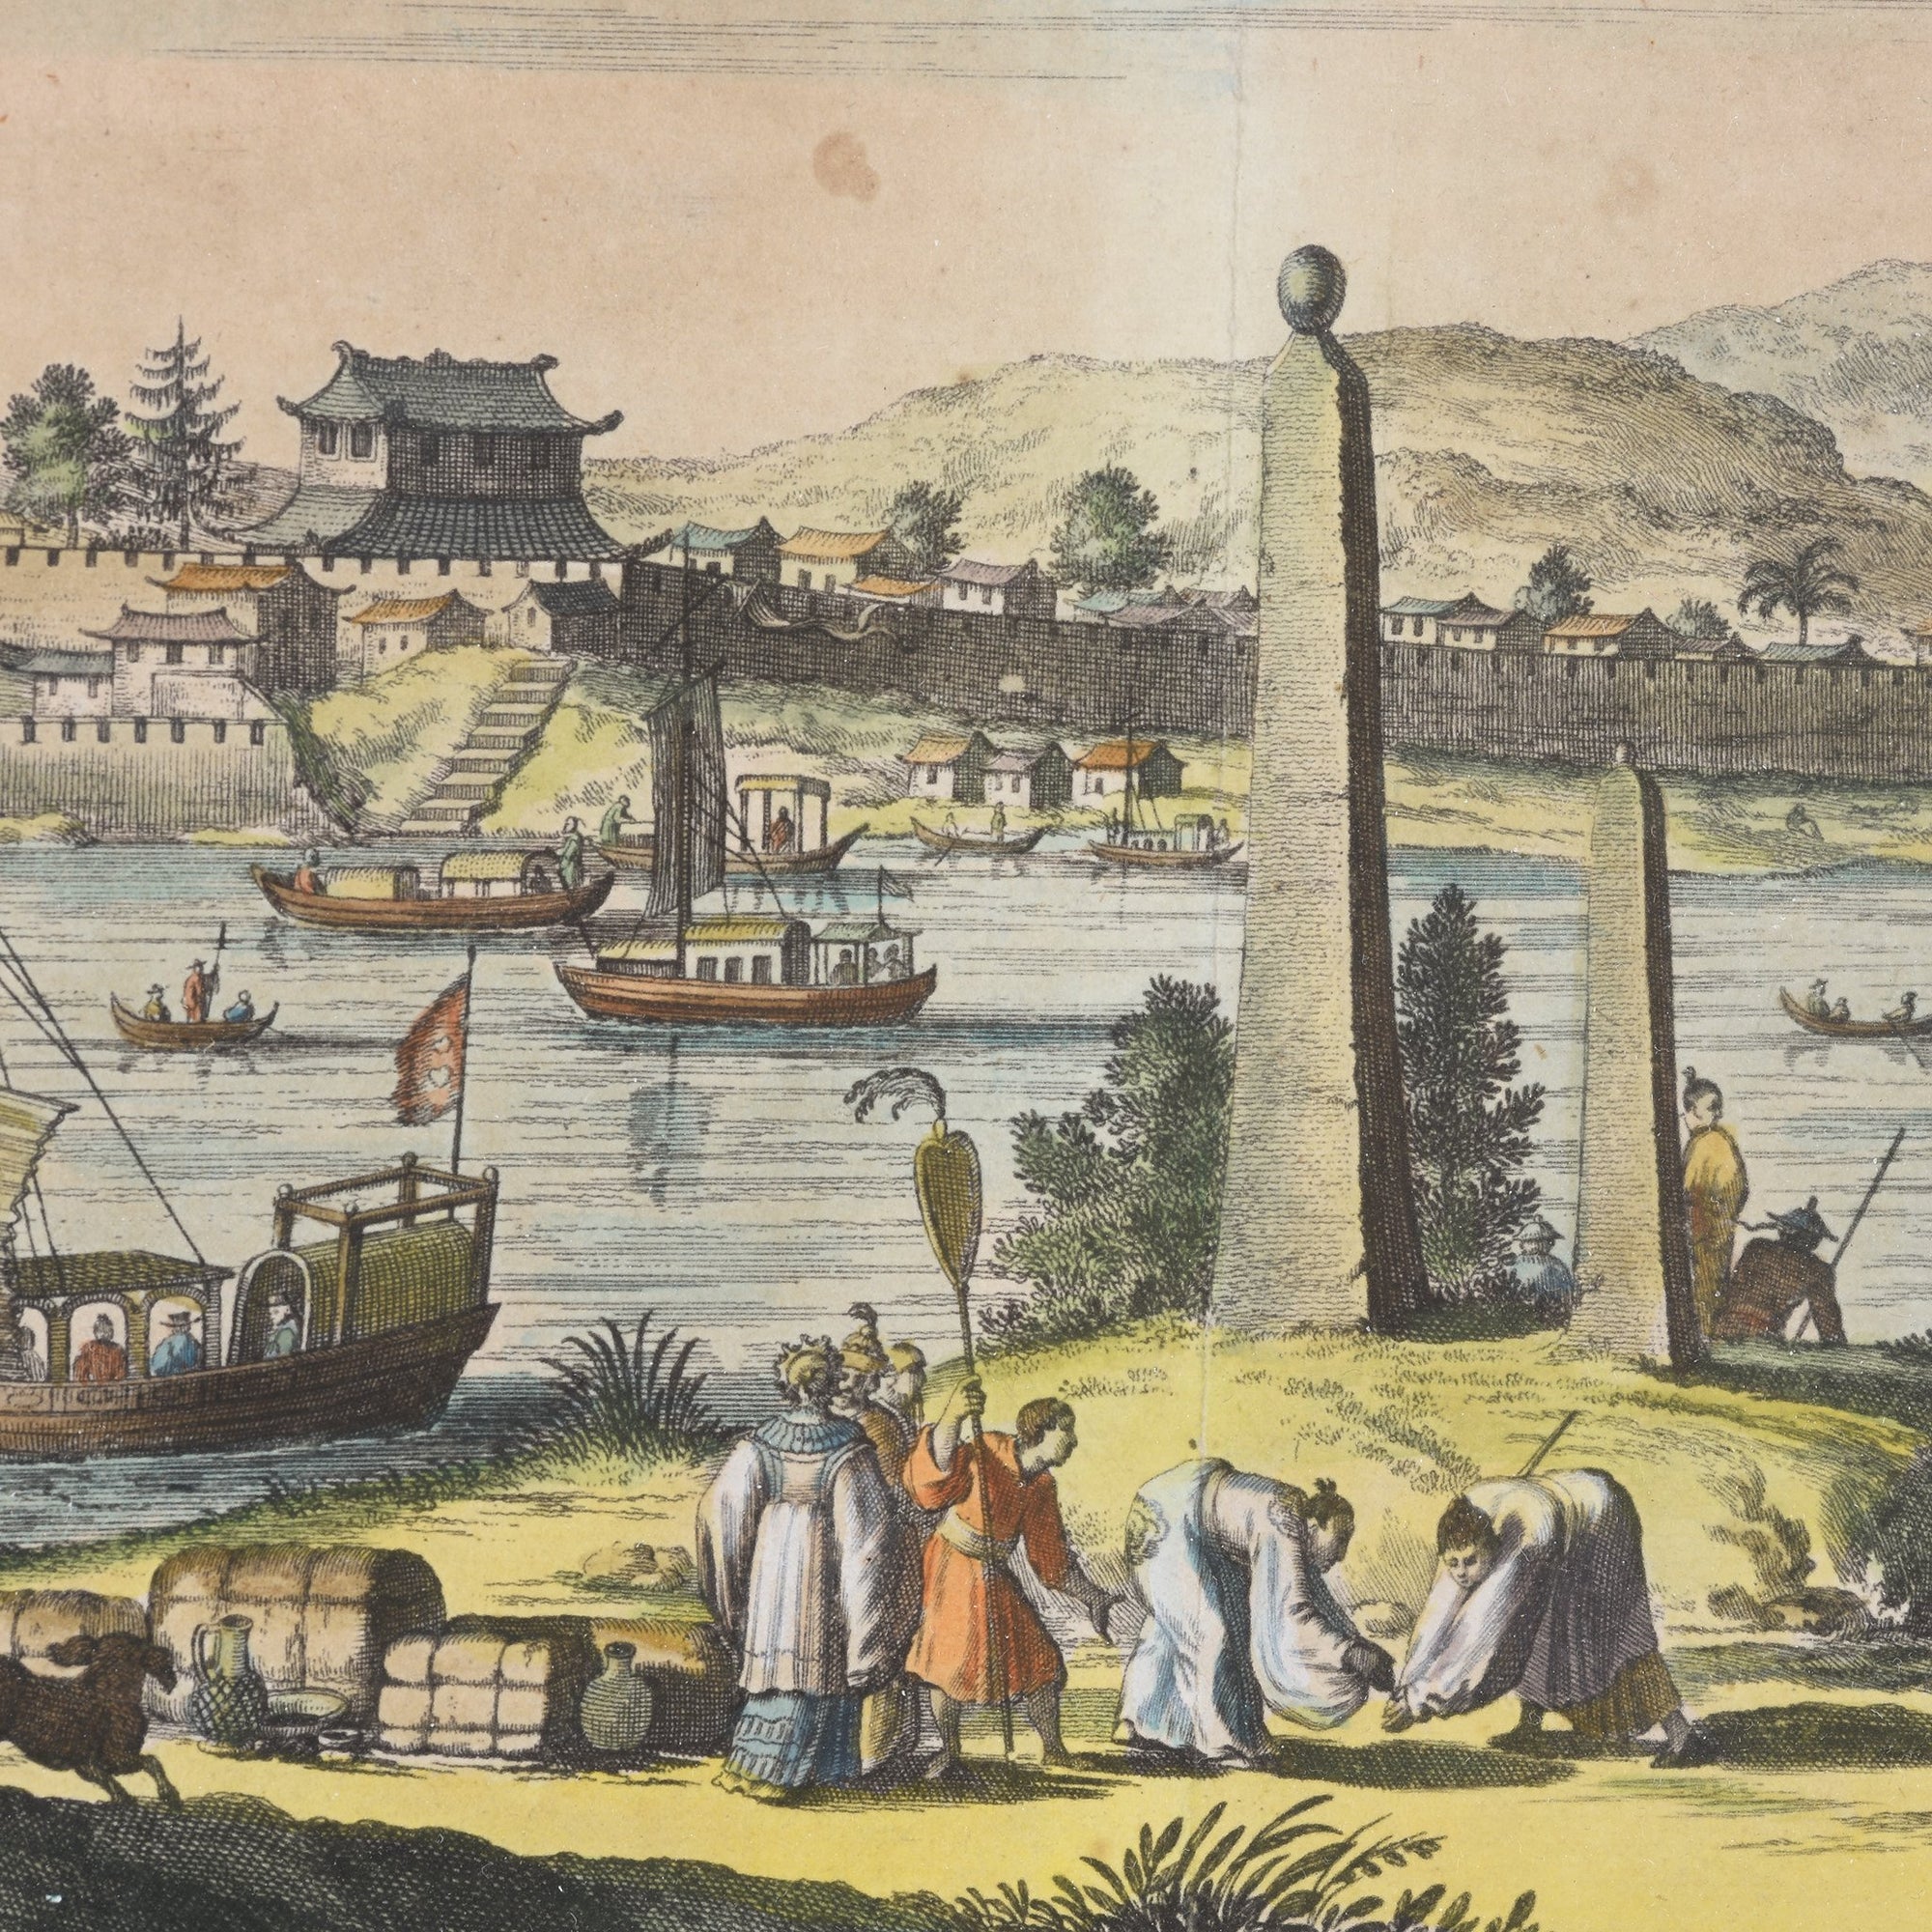 Original 17thC Tinted Engraving of a Chinese River Landscape at Hitsiu - 17thC engraving - 28 x 24.5 cms - M183V3